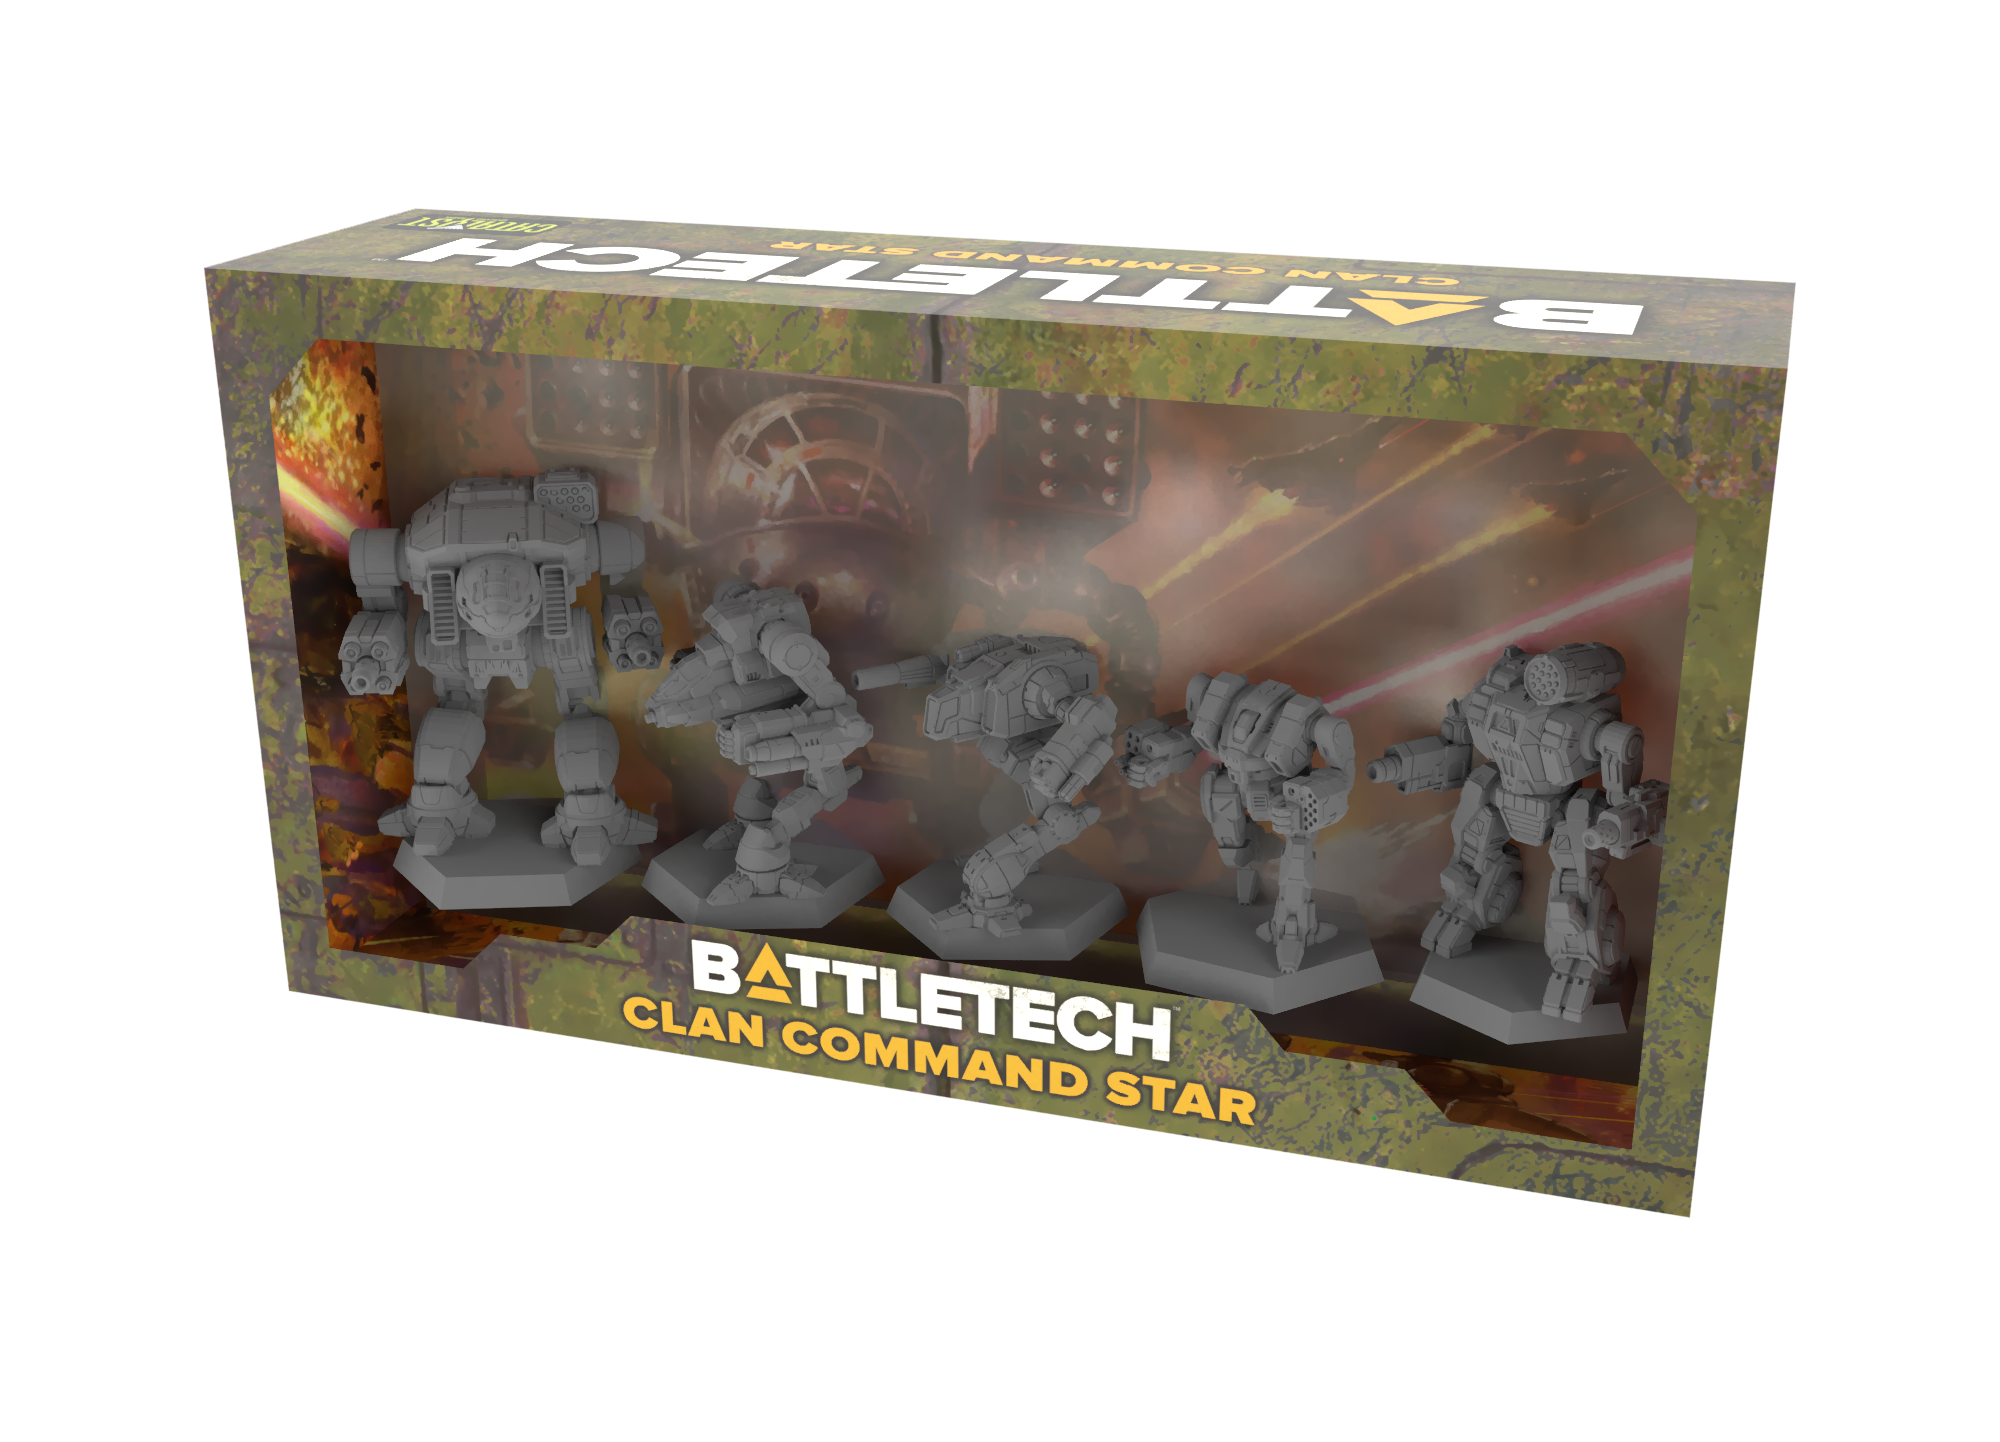 BattleTech: Clan Striker Star